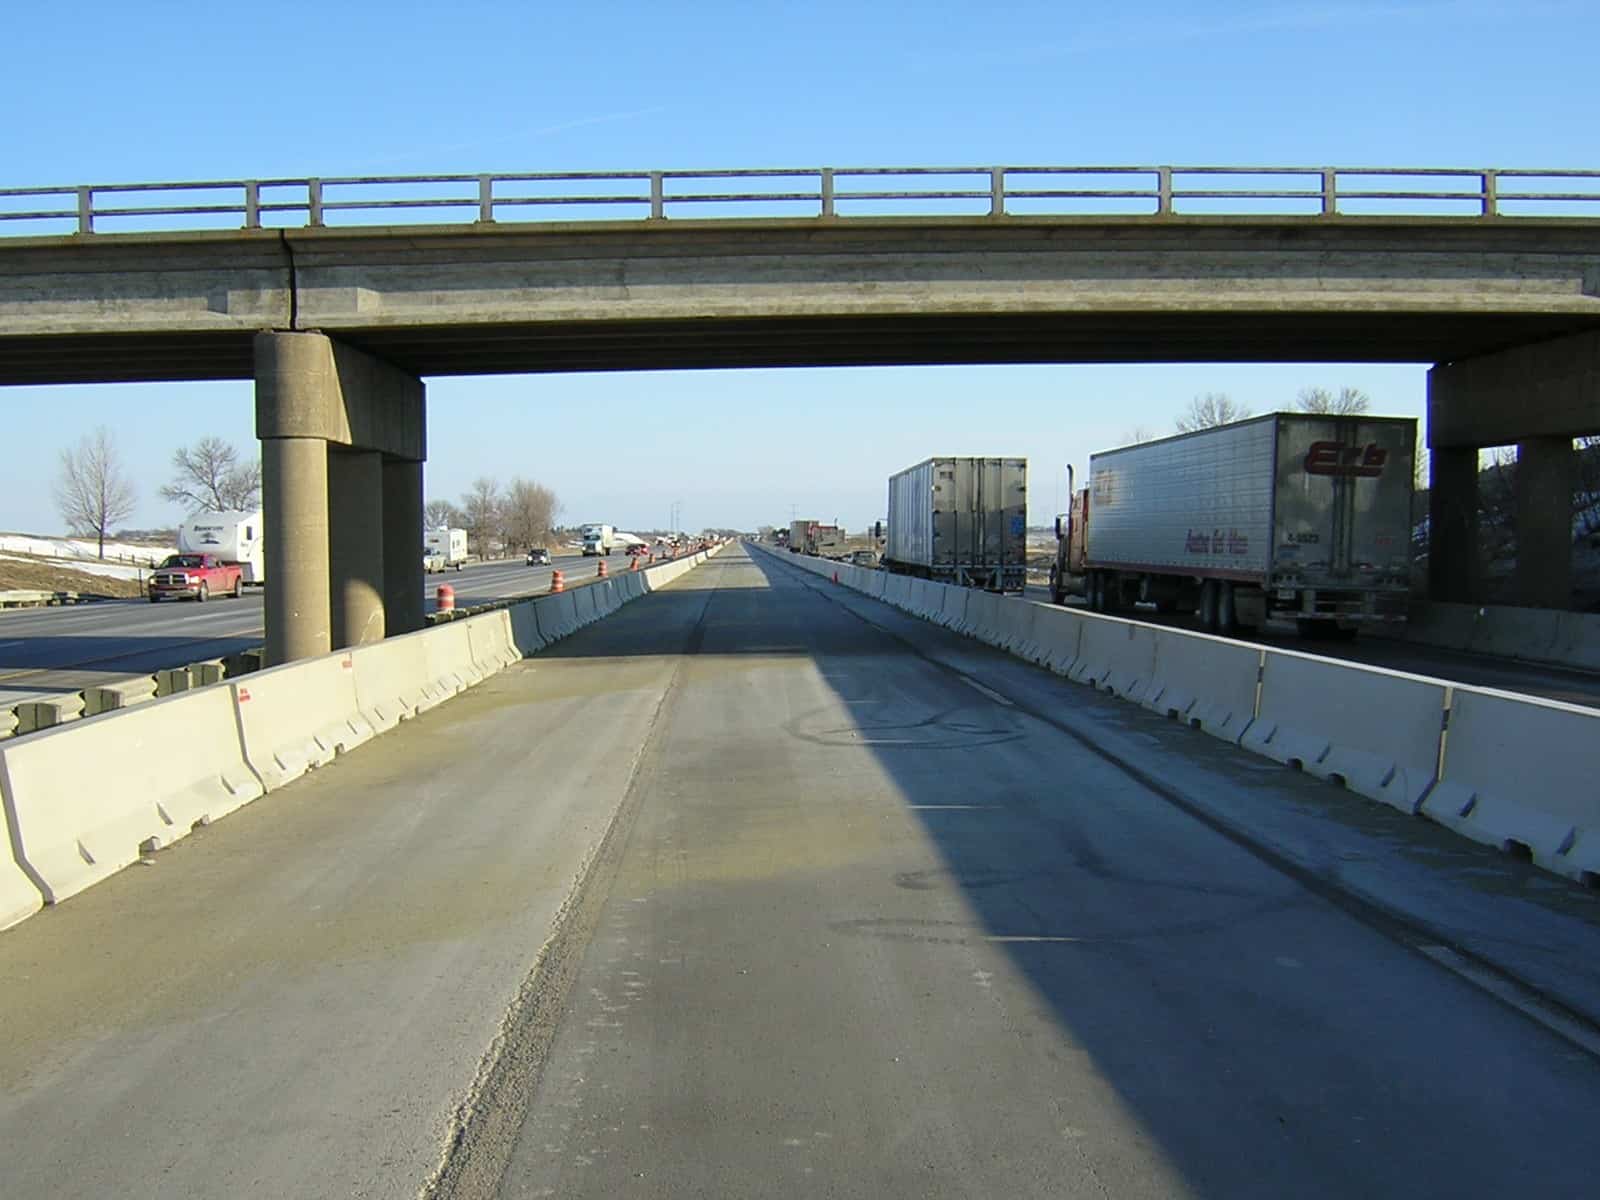 Rochester Median Highway Barrier by Wieser Concrete